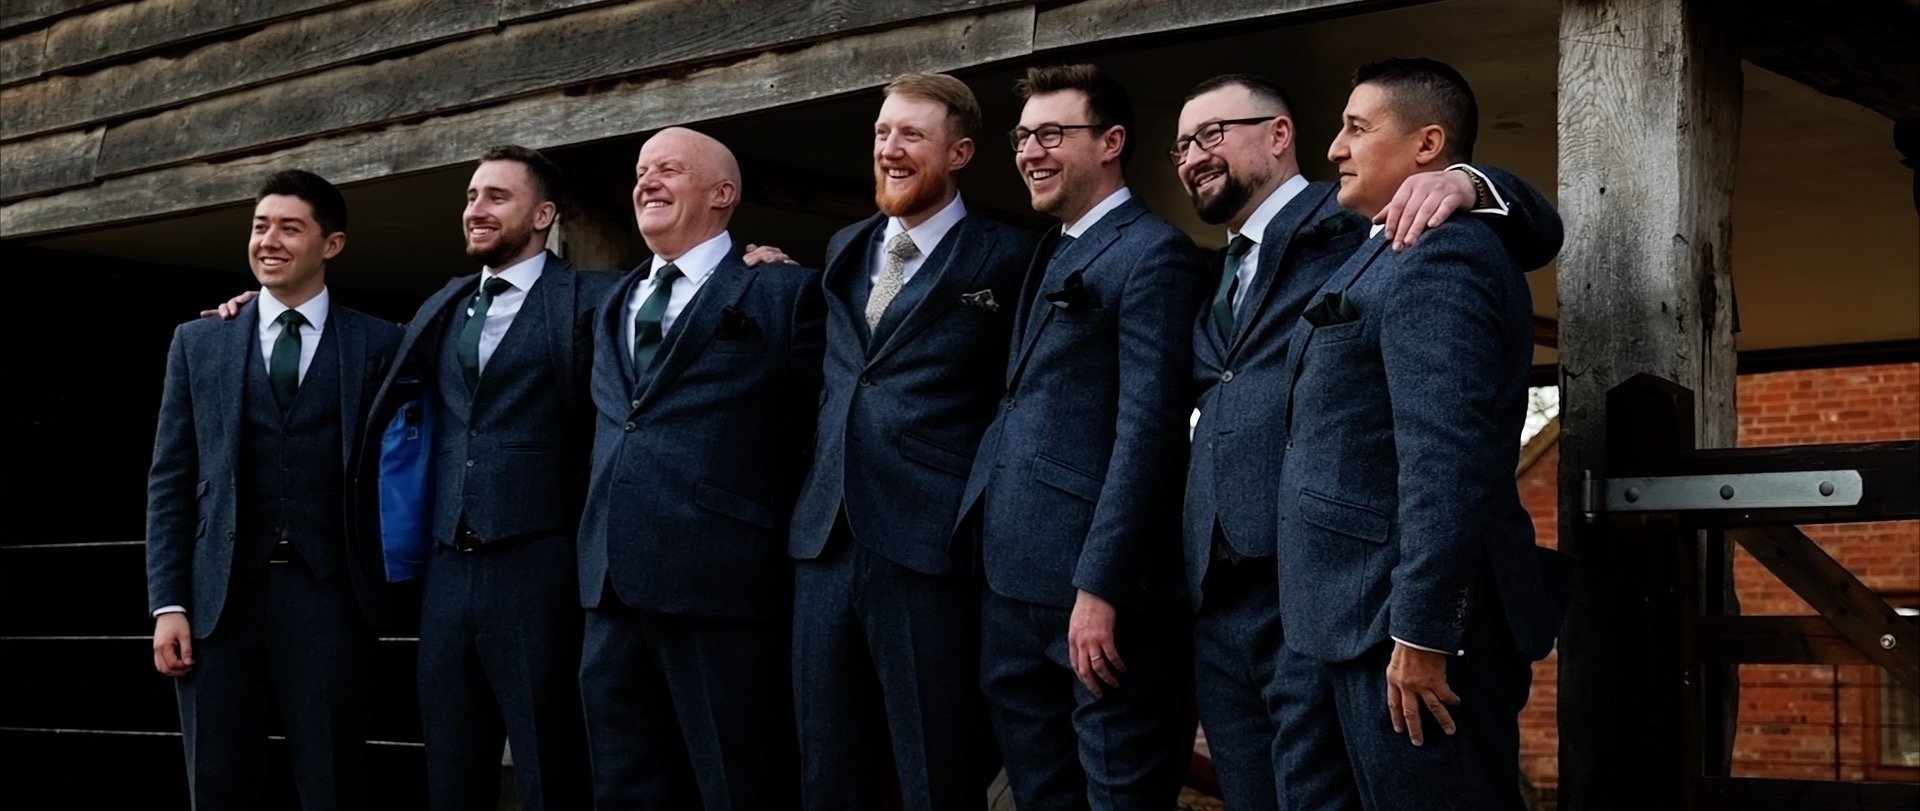 Apton Hall Wedding Videography - 3 Cheers Media - The groomsmen.jpg